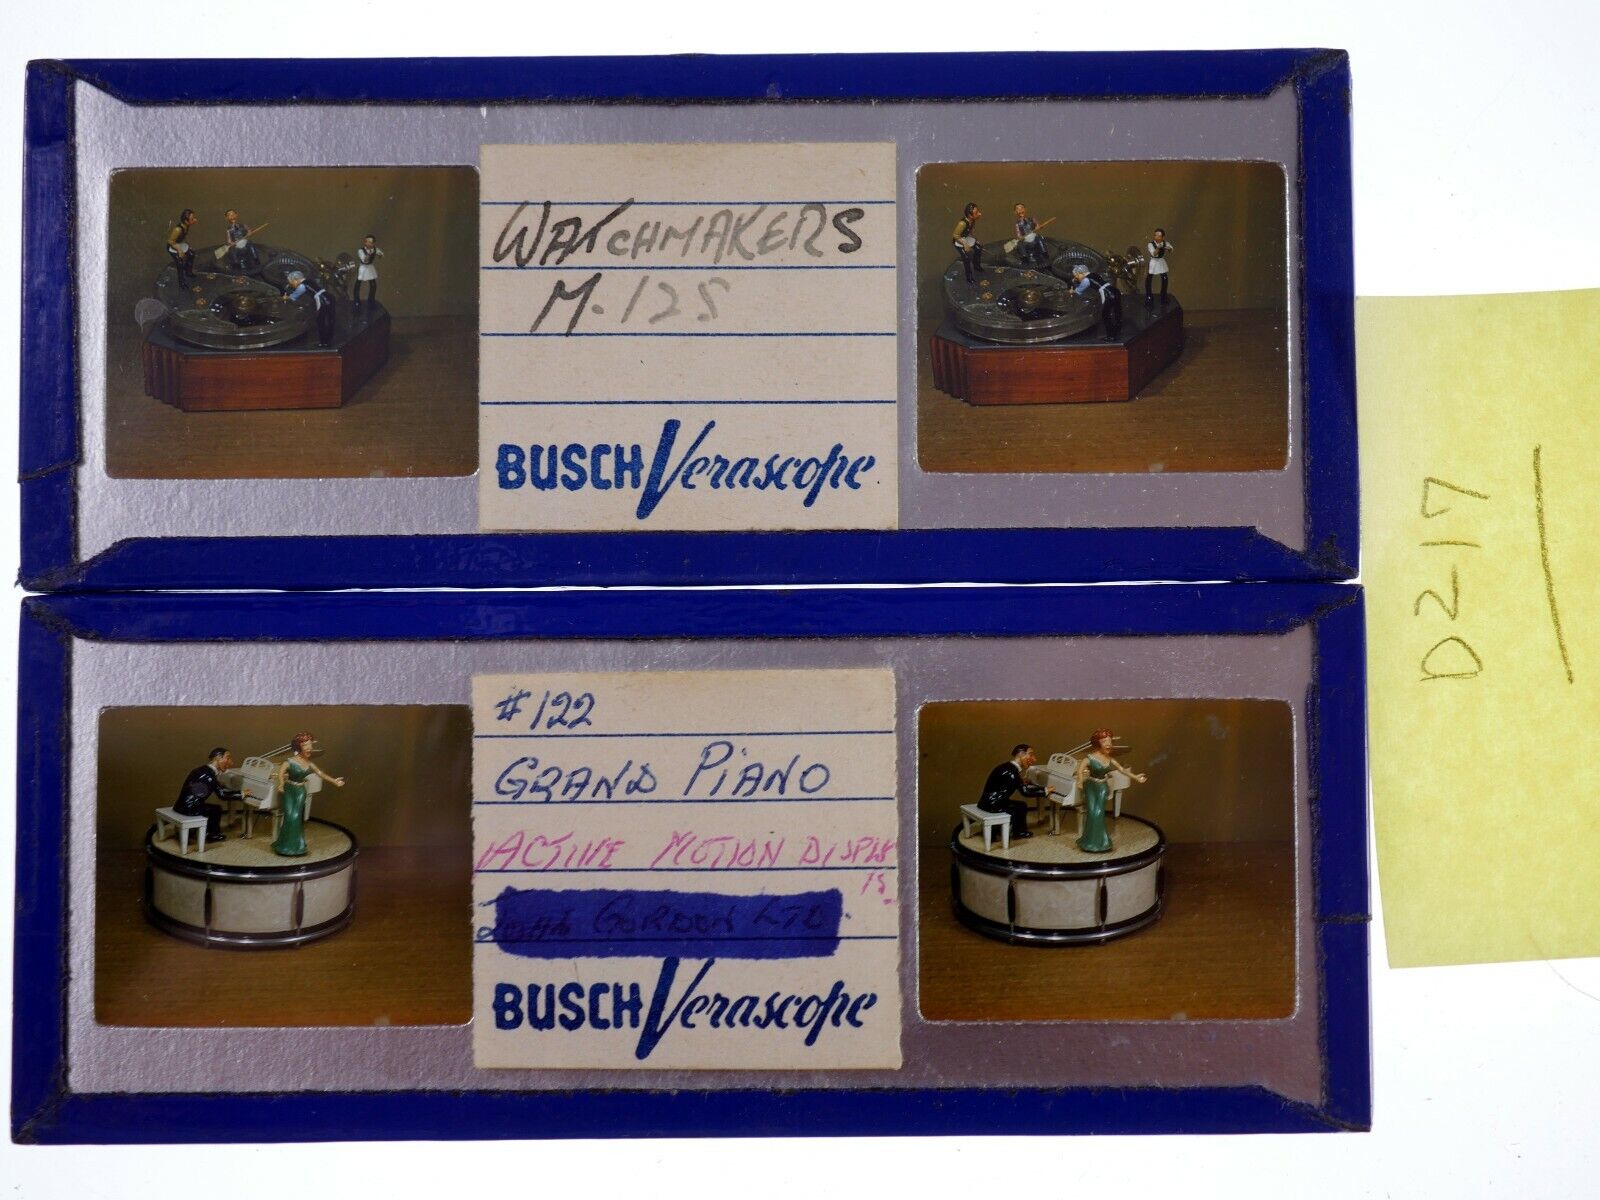 2 Stereo Realist slides - Tabletops 7p in Busch Verascope glass mounts - DZ17